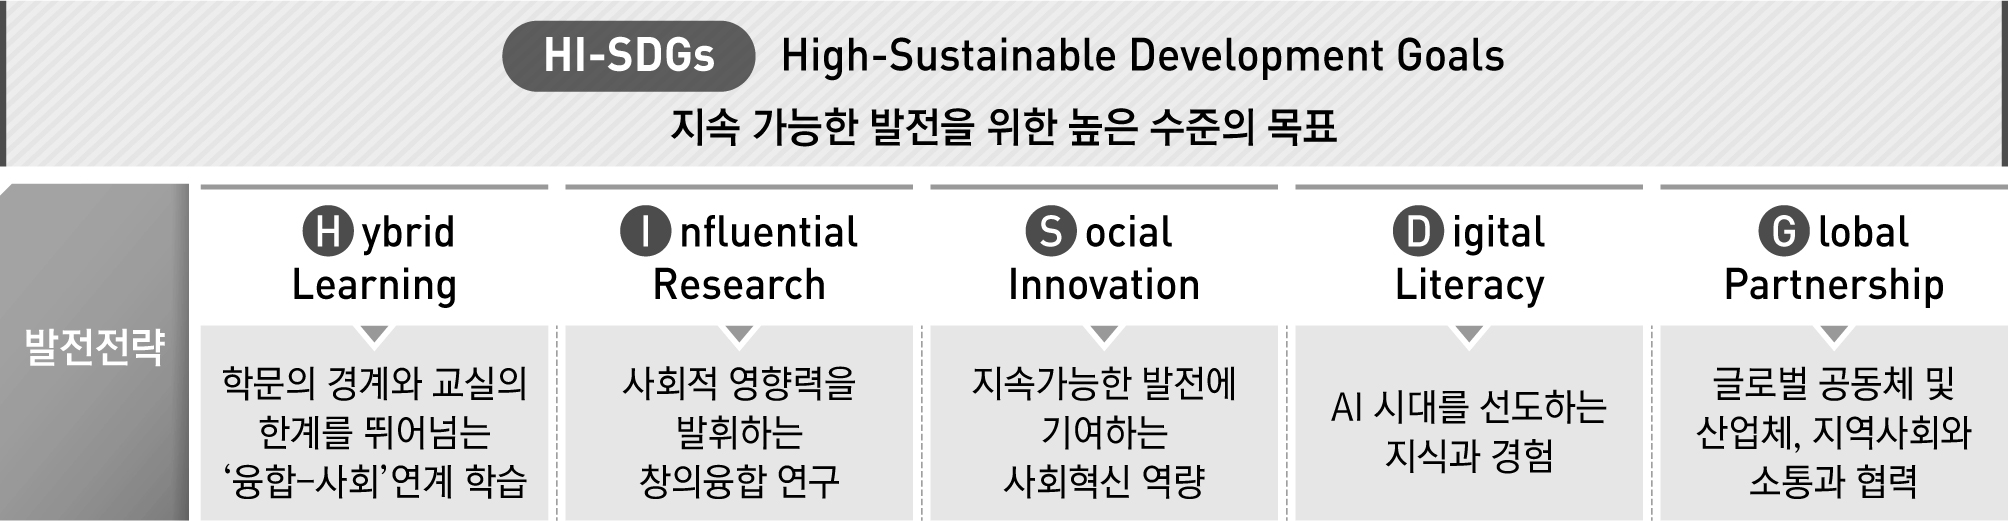 High-Sustainable Delvelopment Goals 지속 가능한 발전을 위한 높은 수준의 목표 이미지